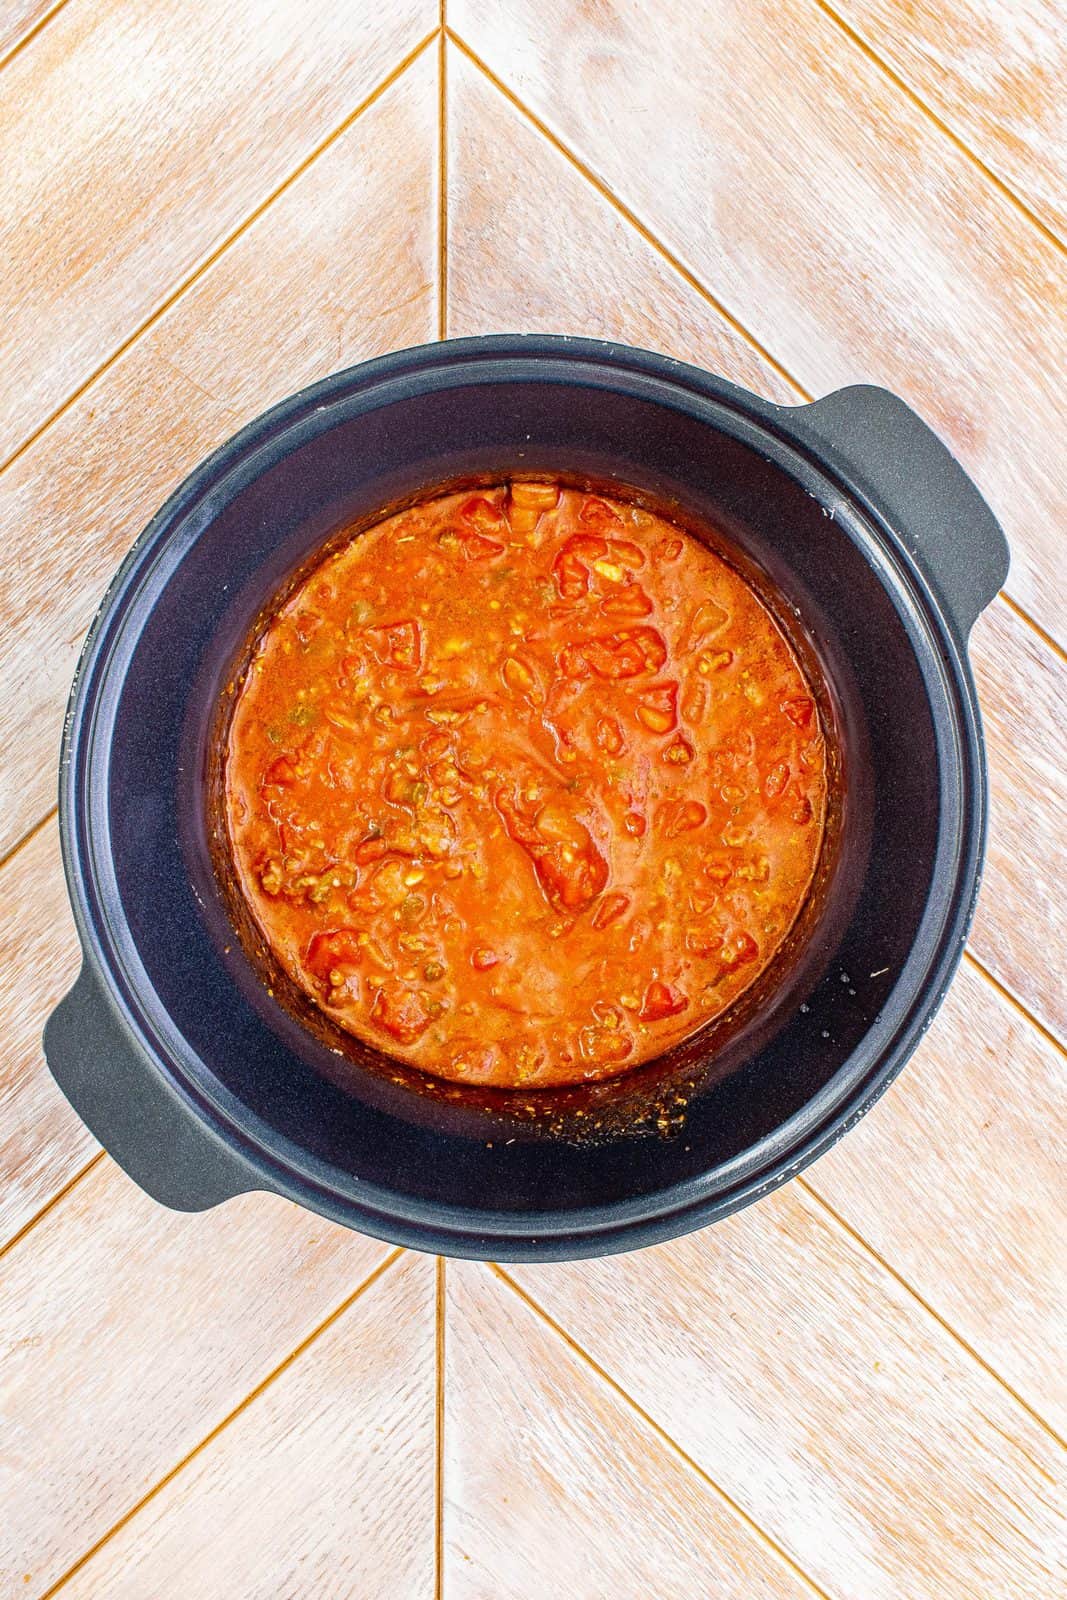 Garlic, pasta sauce, tomato sauce, diced tomatoes, water, Italian seasoning and sugar added to crock pot and stirred.